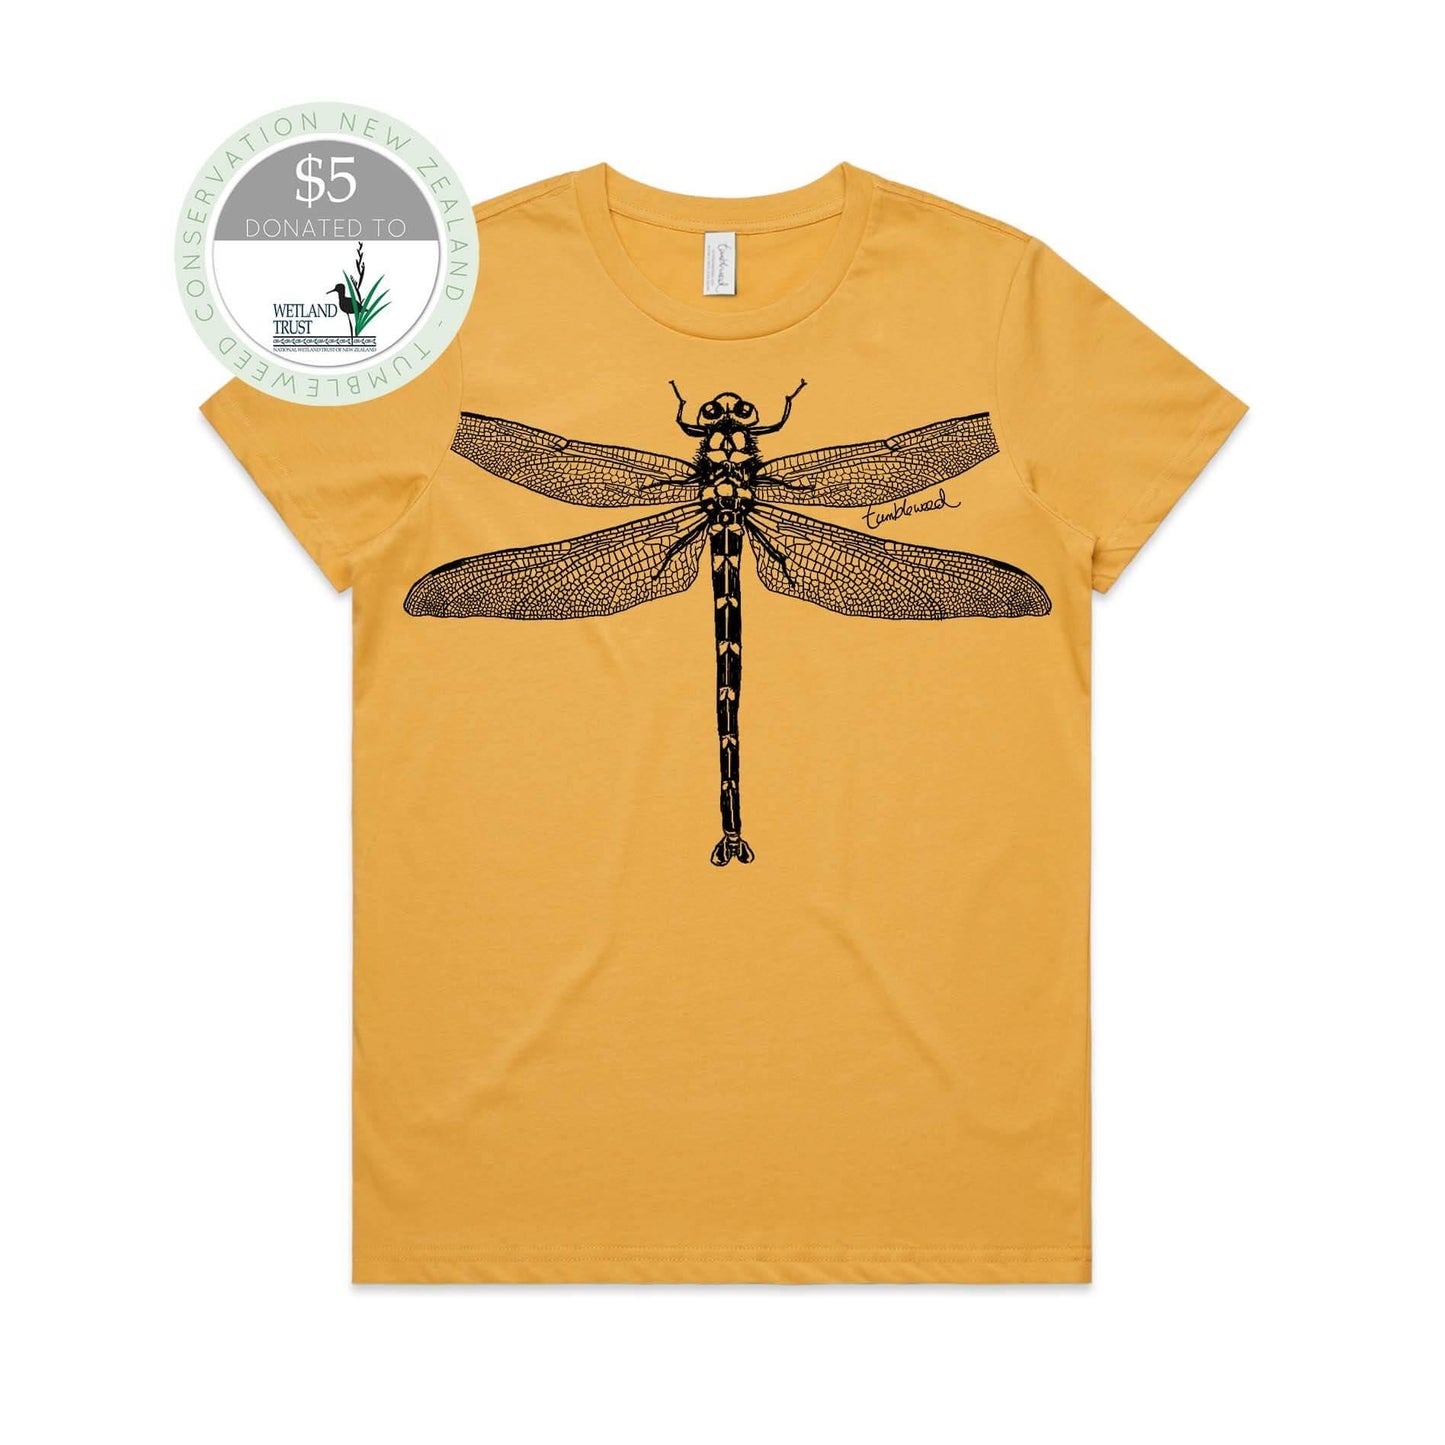 Mustard, female t-shirt featuring a screen printed black nz dragonfly design.